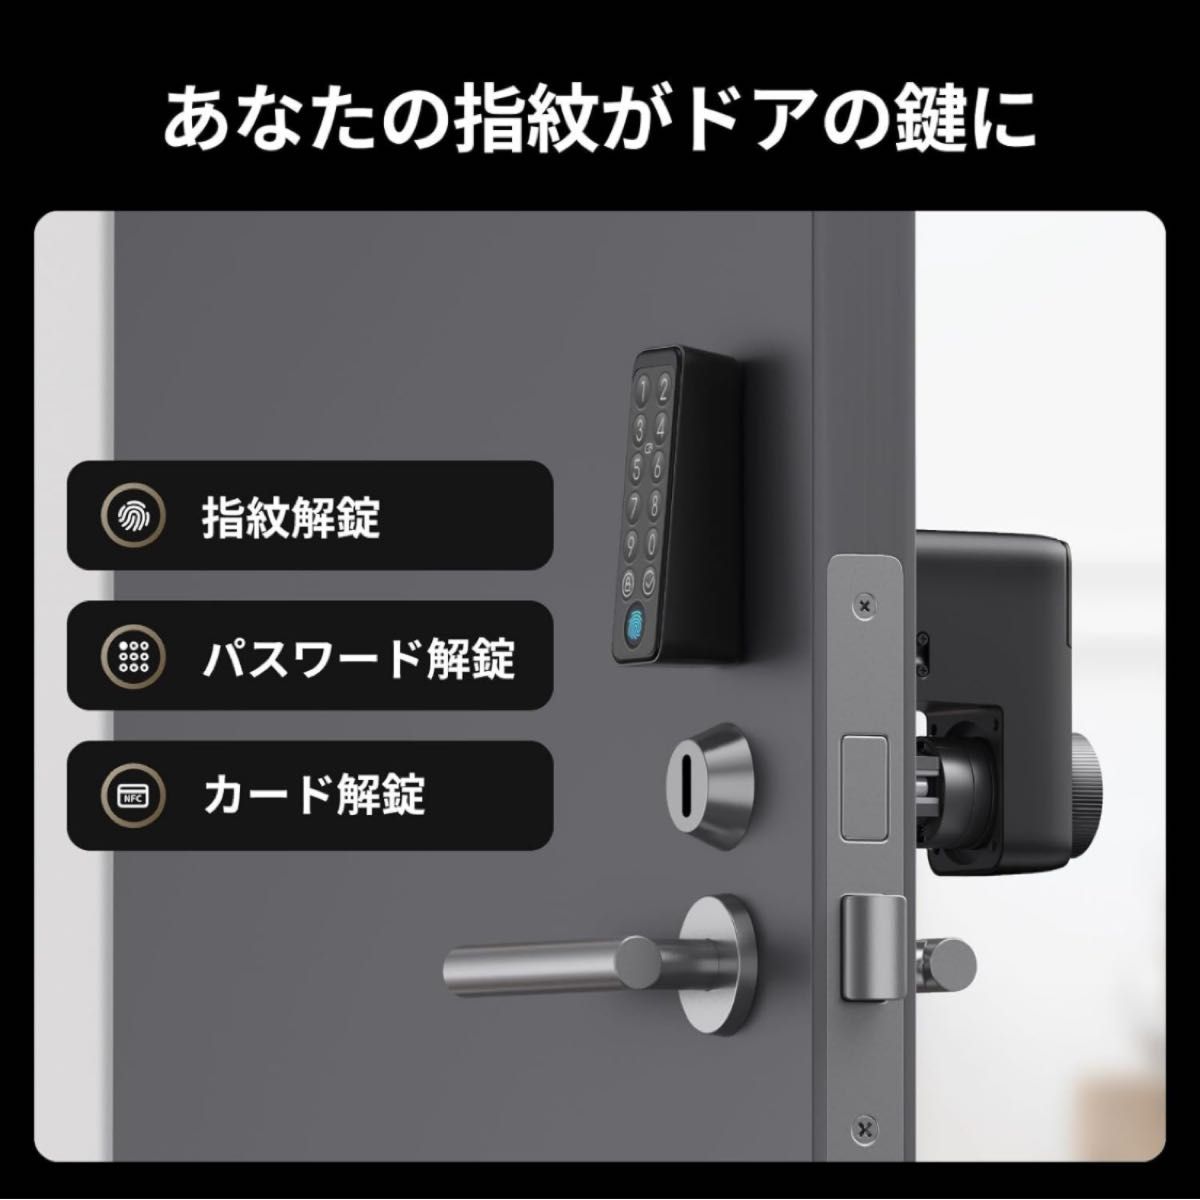 SwitchBot スマートロック プロ 指紋認証パッド 暗証番号 - スイッチボット 鍵 スマートキー オートロック ドアロック